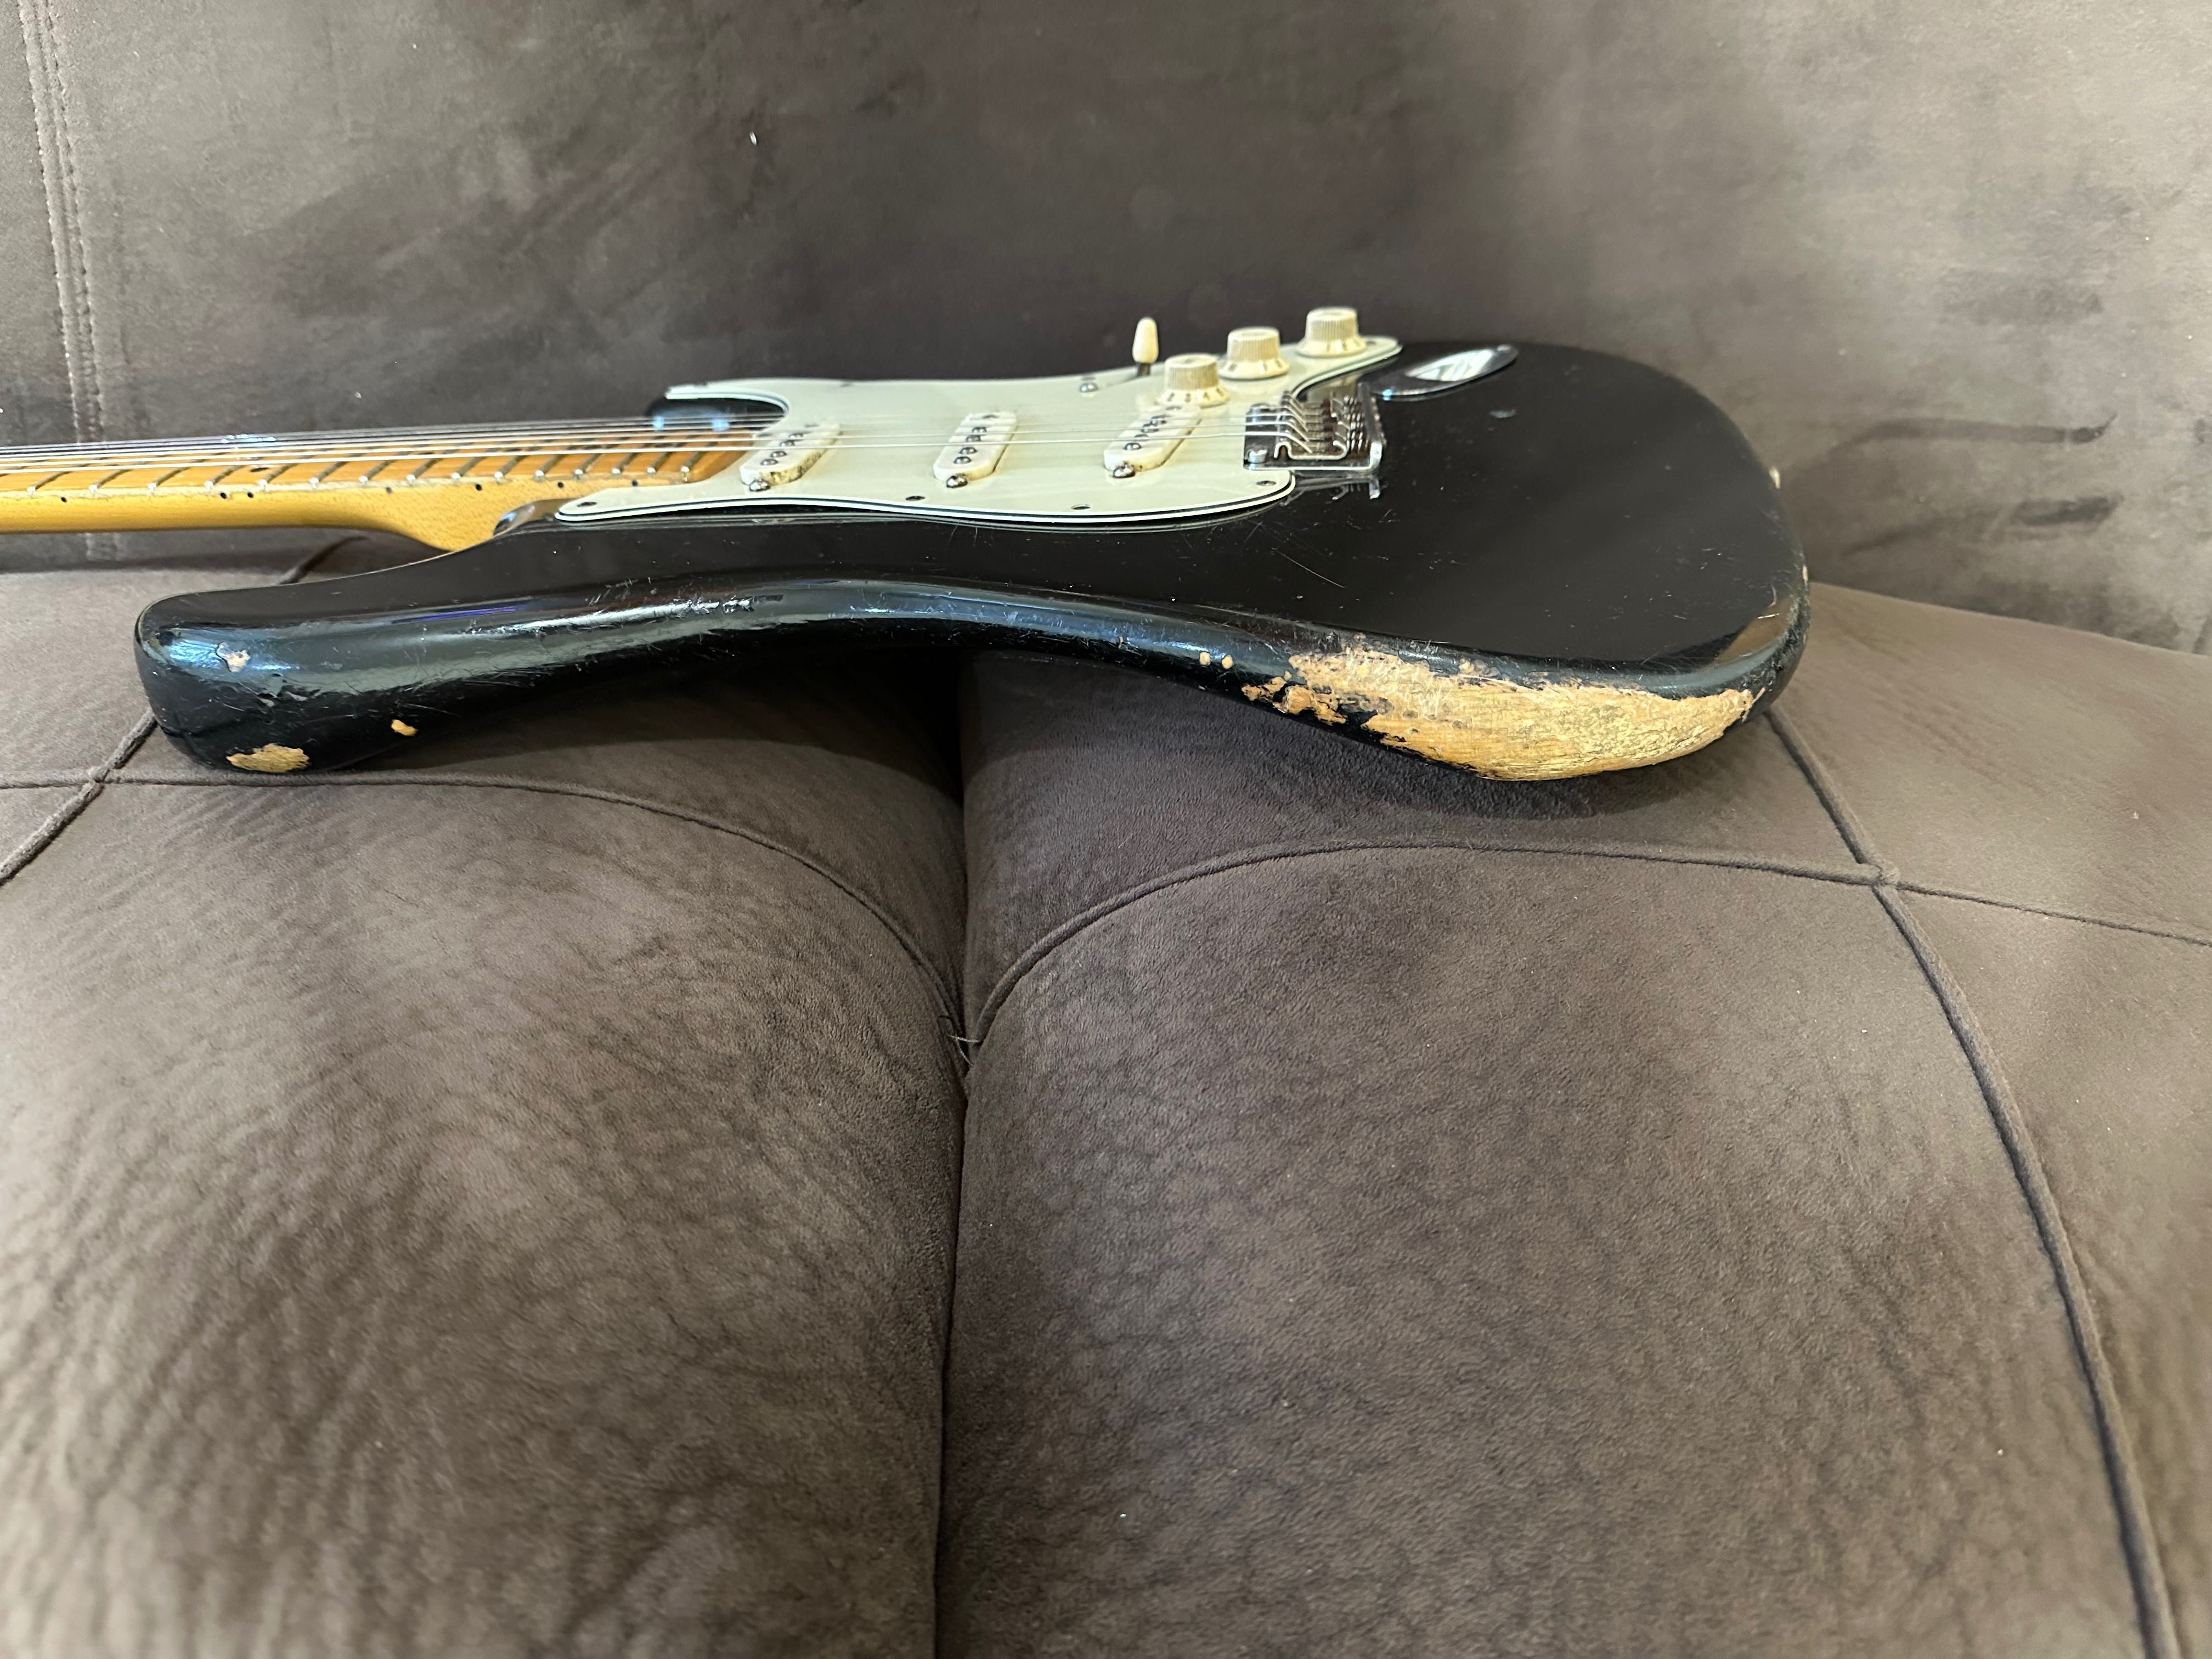 Китара Fender Stratocaster черна